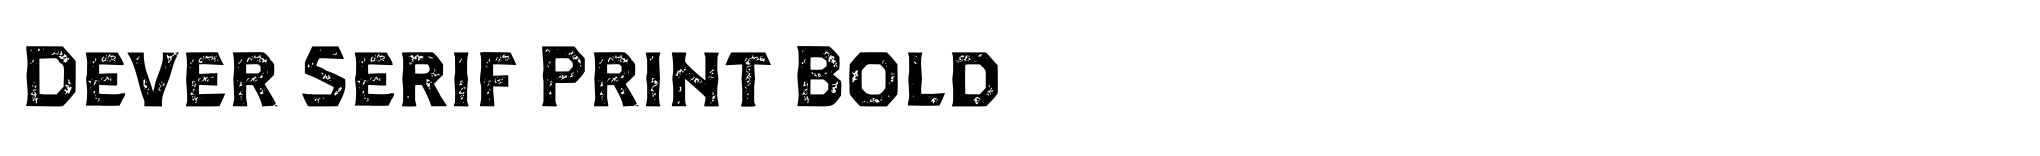 Dever Serif Print Bold image